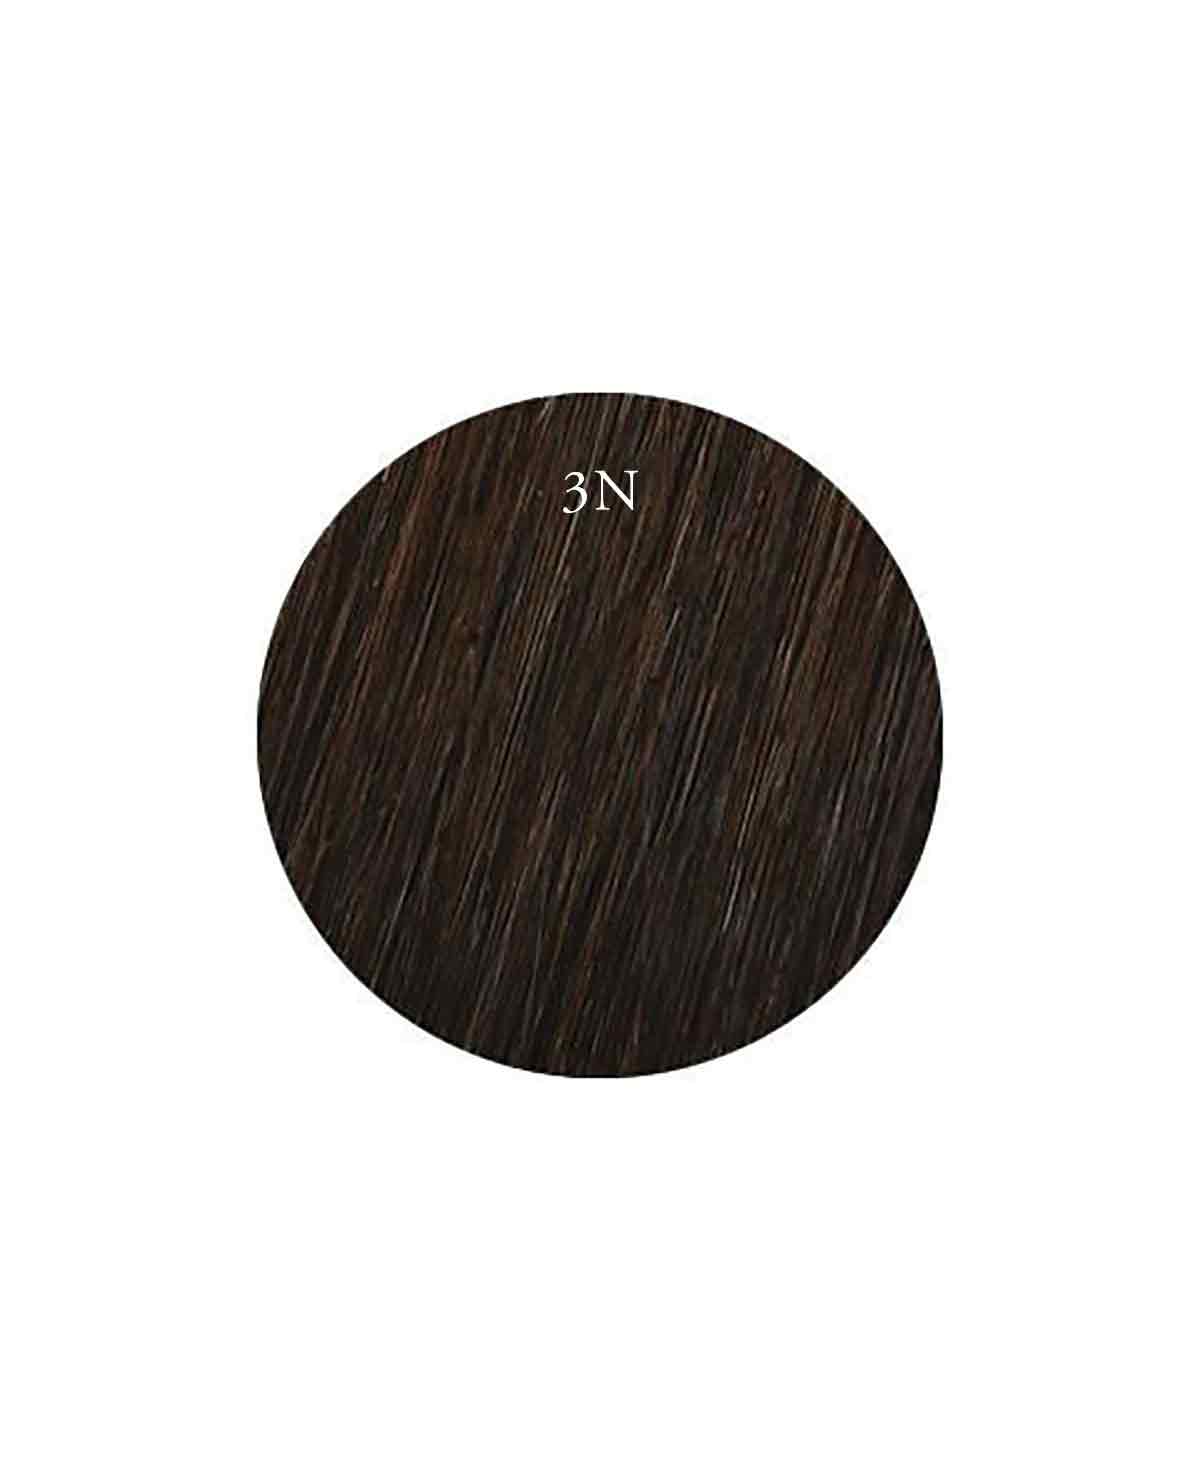 Showpony 45-50cm (20") 7 Piece Clip In Hair Extension - 3N Black Brown